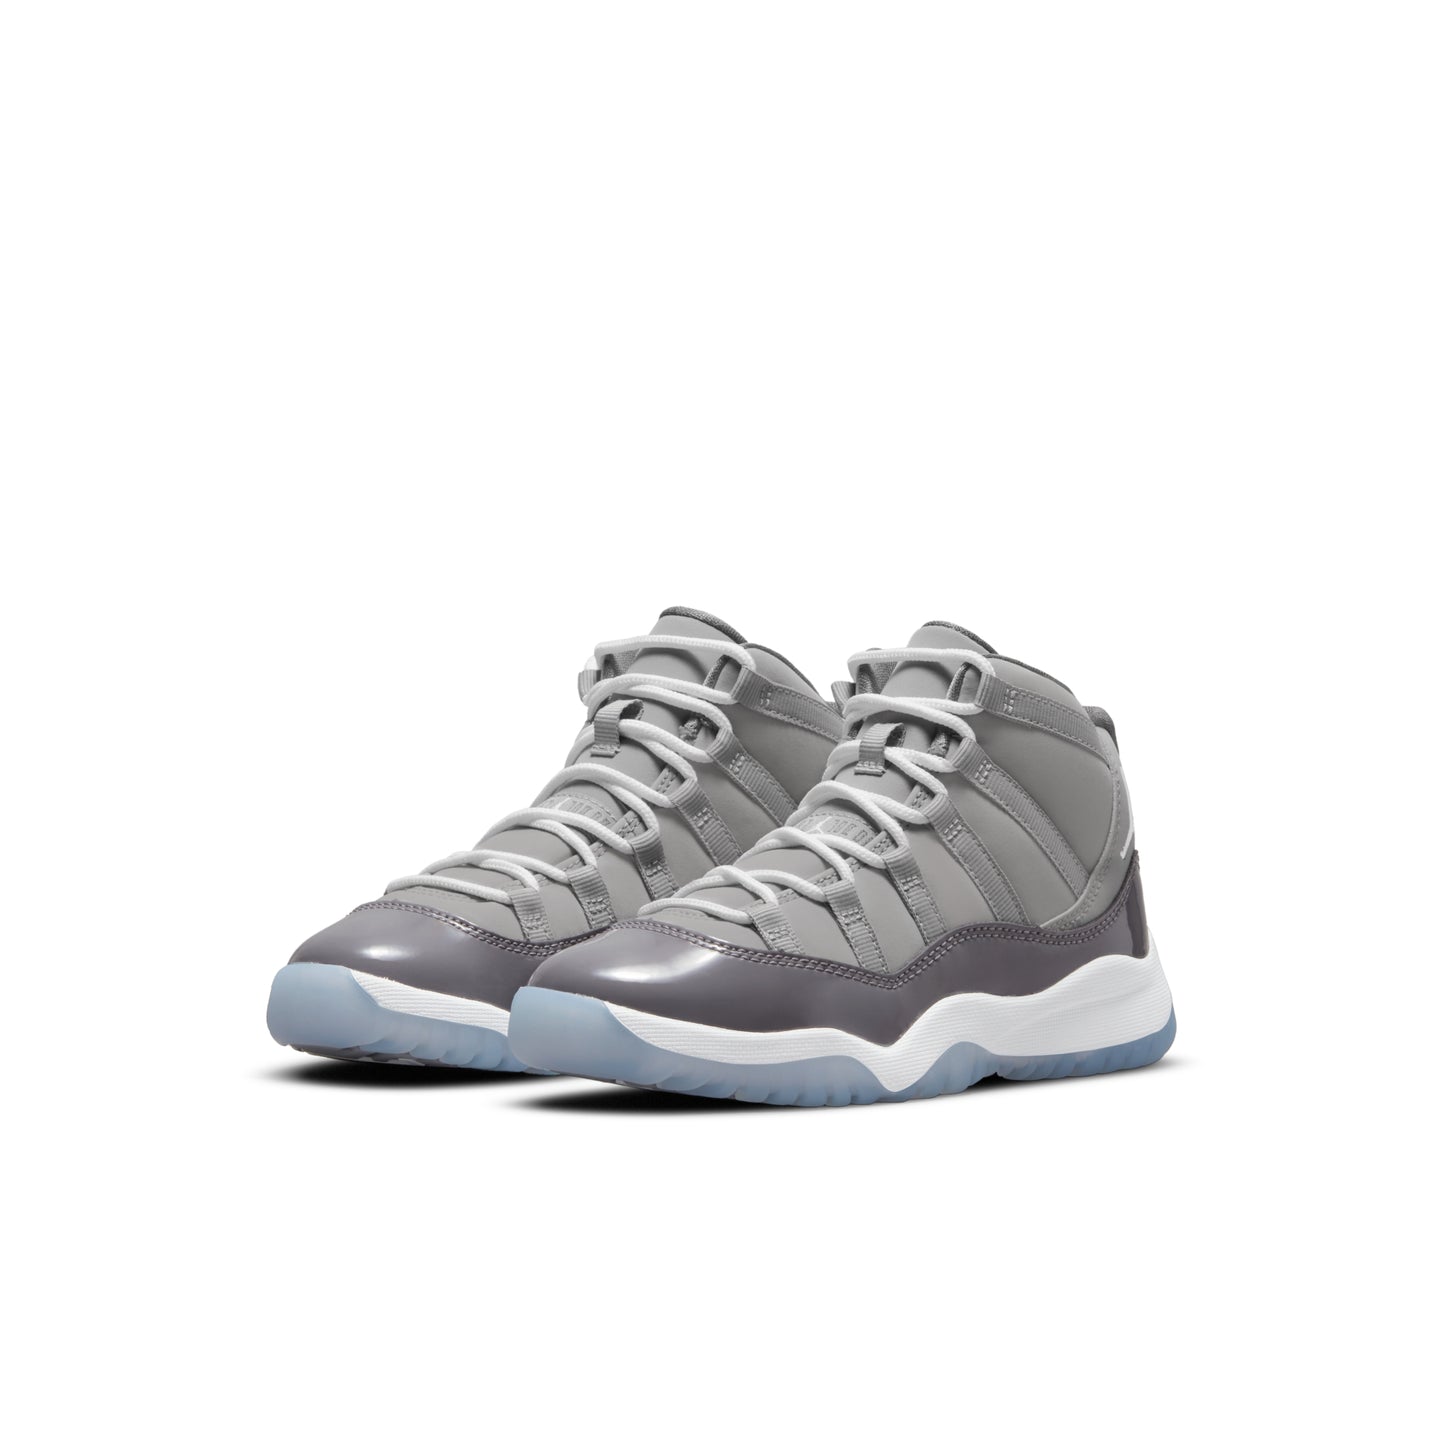 Nike Air Jordan 11 Retro PS "Cool Grey"